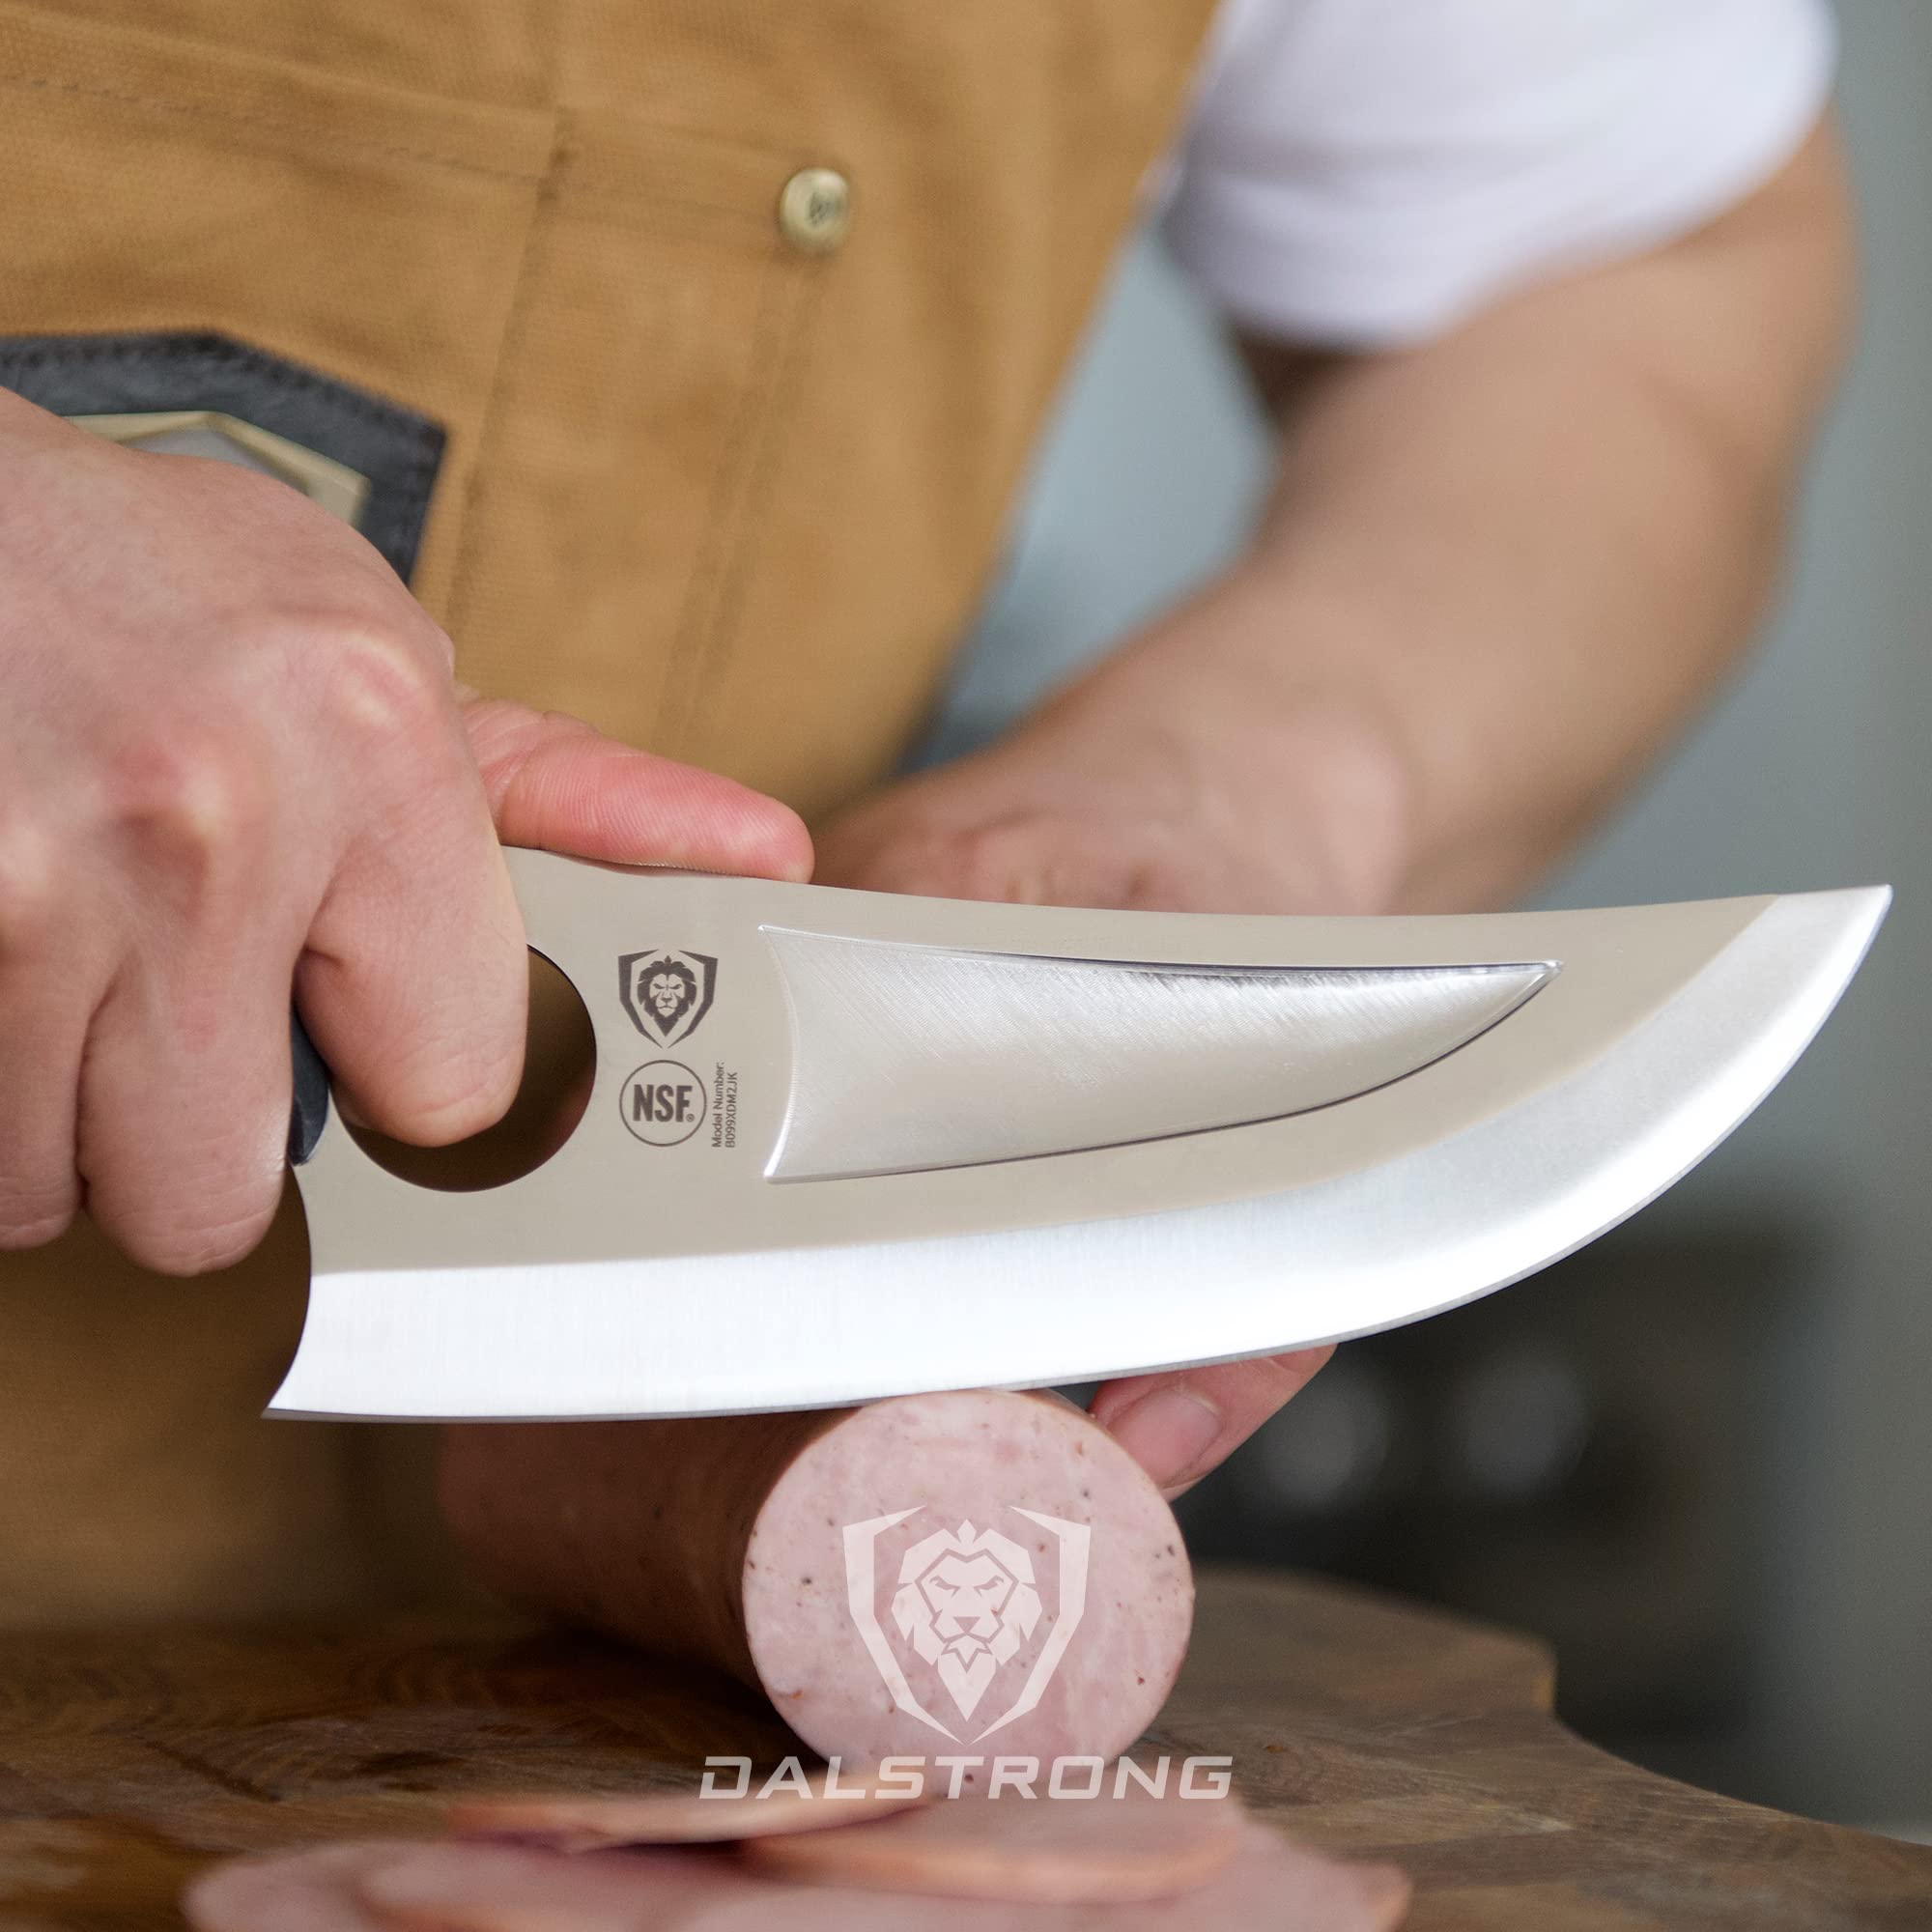 Dalstrong Chef & Utility Knife - 7 inch - Multi-Purpose - The Venator - Gladiator Series R - 7CR17MOV High Carbon Steel - Razor Sharp - G10 Handle - w/Sheath - NSF Certified